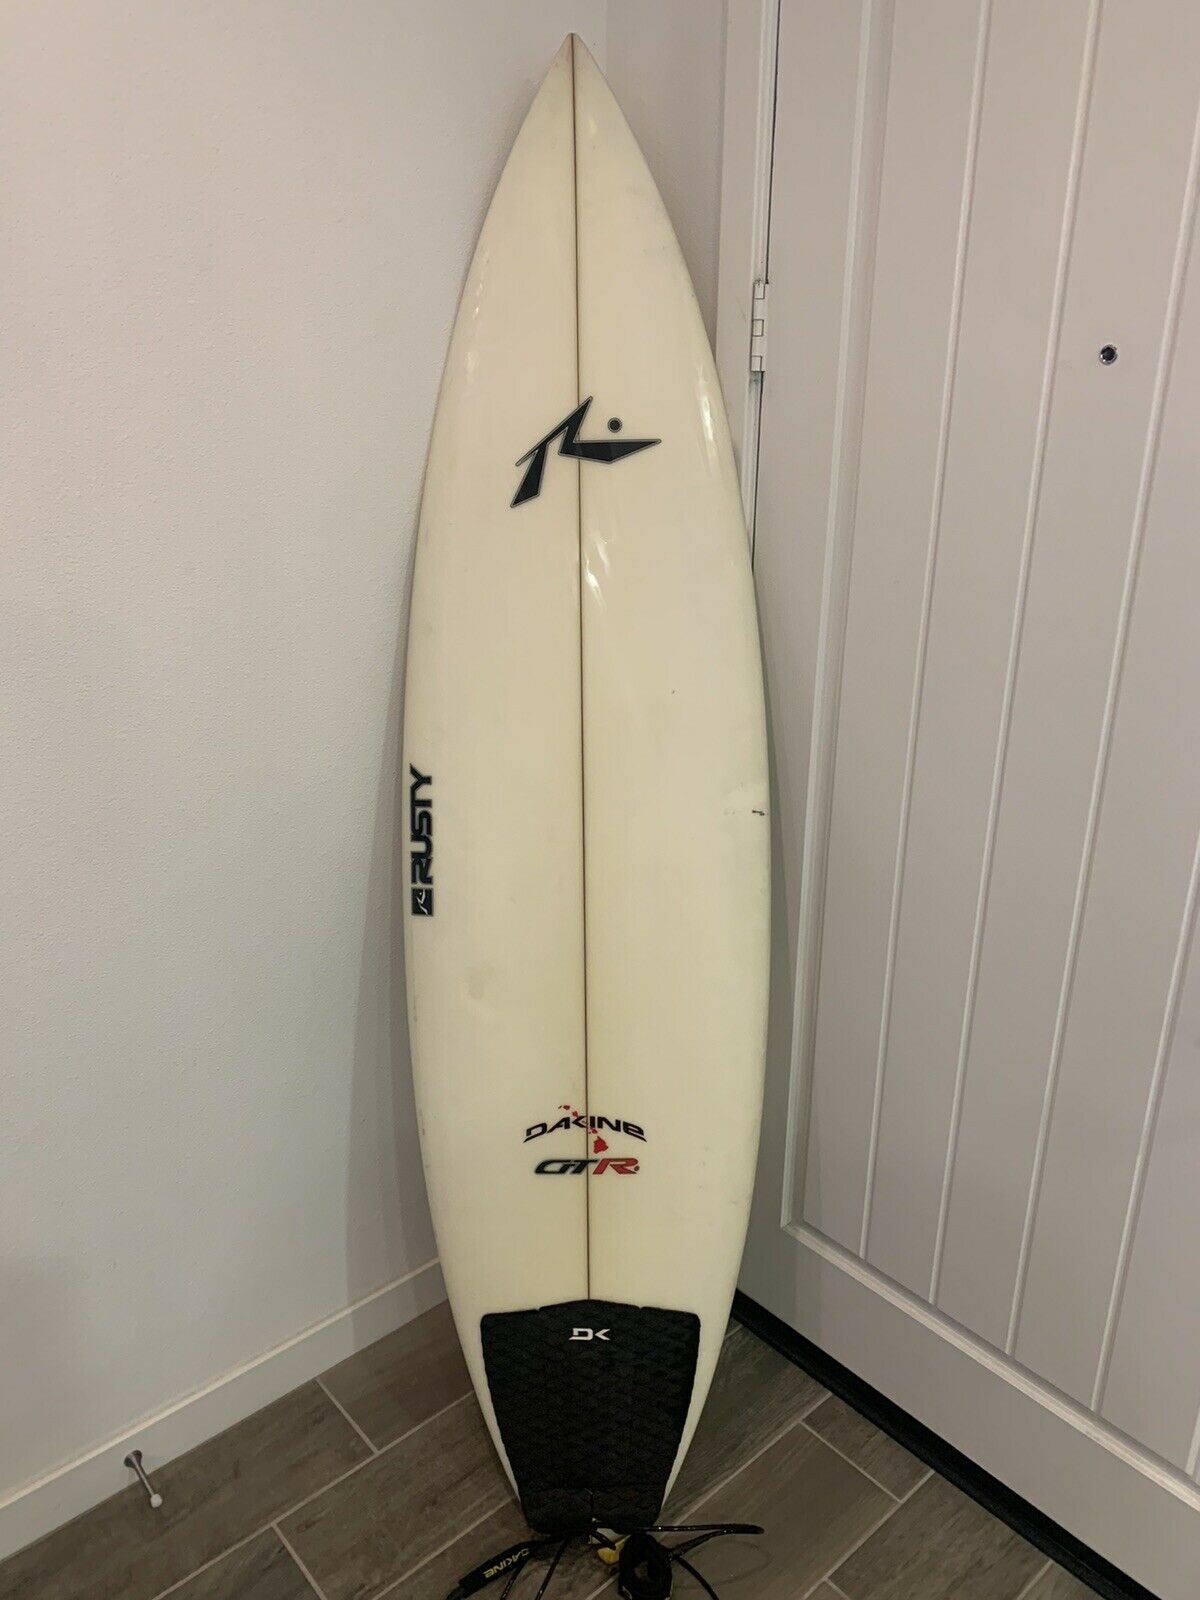 Rusty Gtr Surfboard 6’4 - Dakine - California - Shaper Rusty Preisendorfer